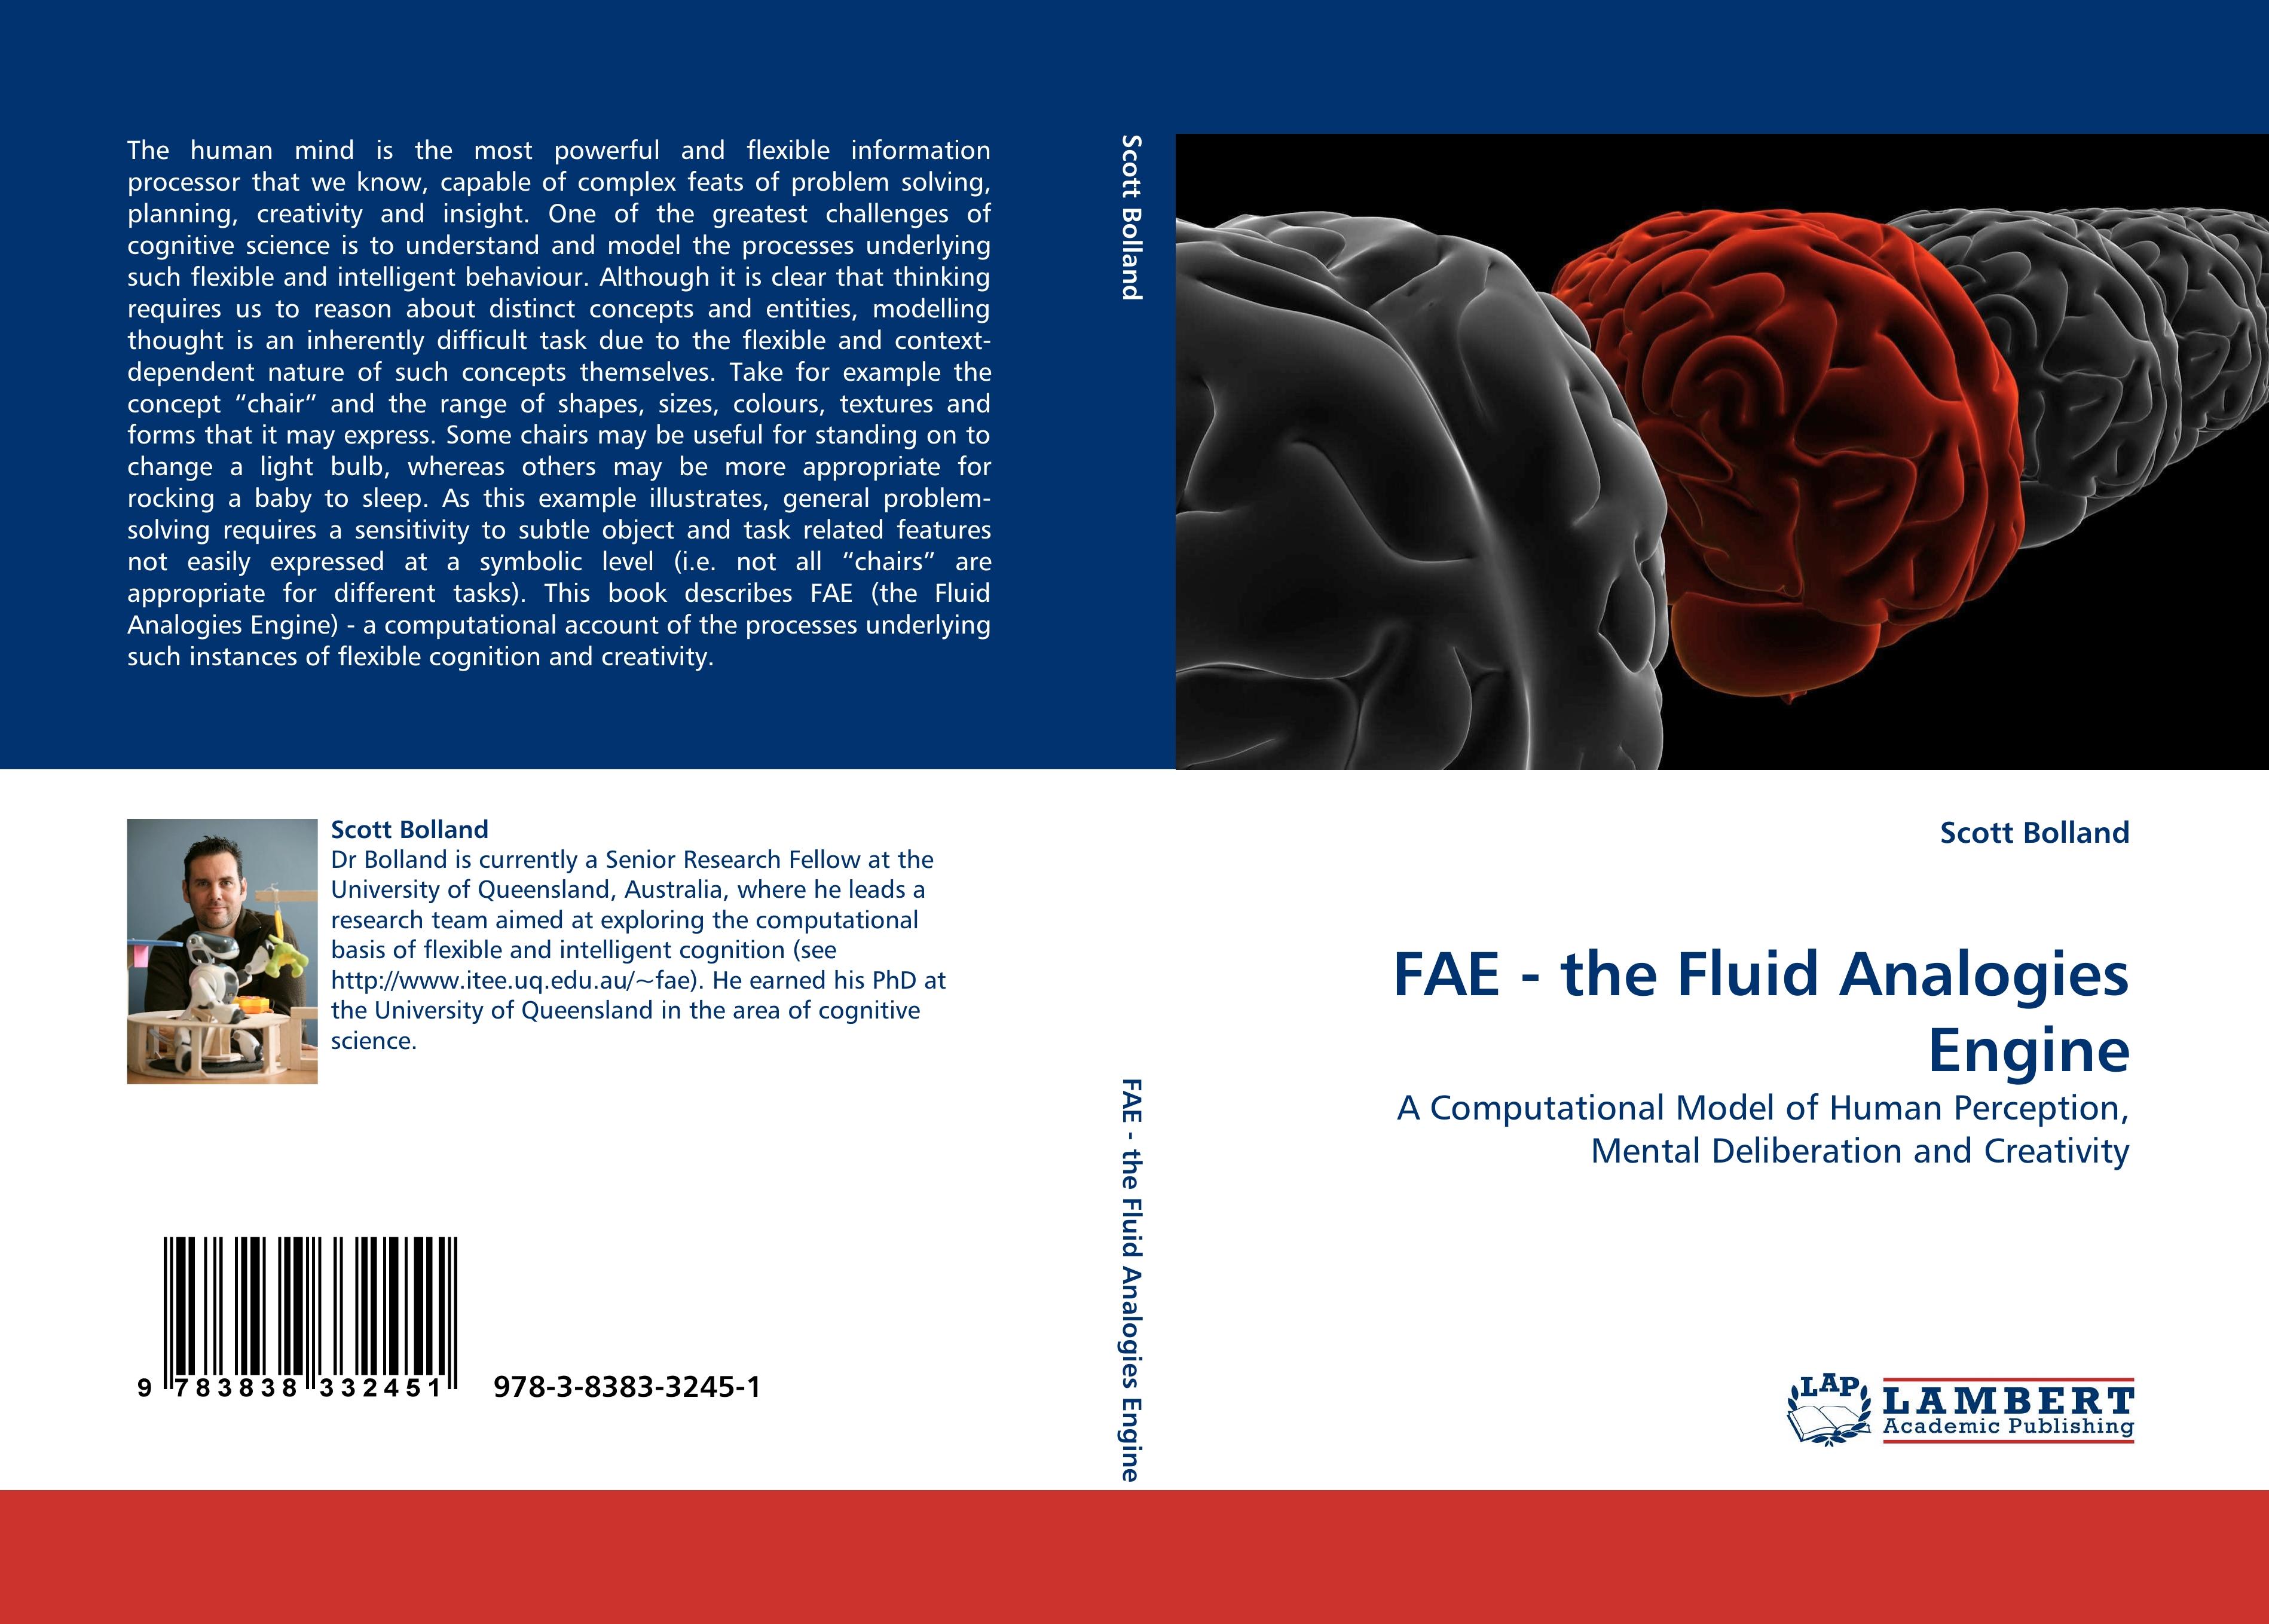 FAE - the Fluid Analogies Engine - Scott Bolland